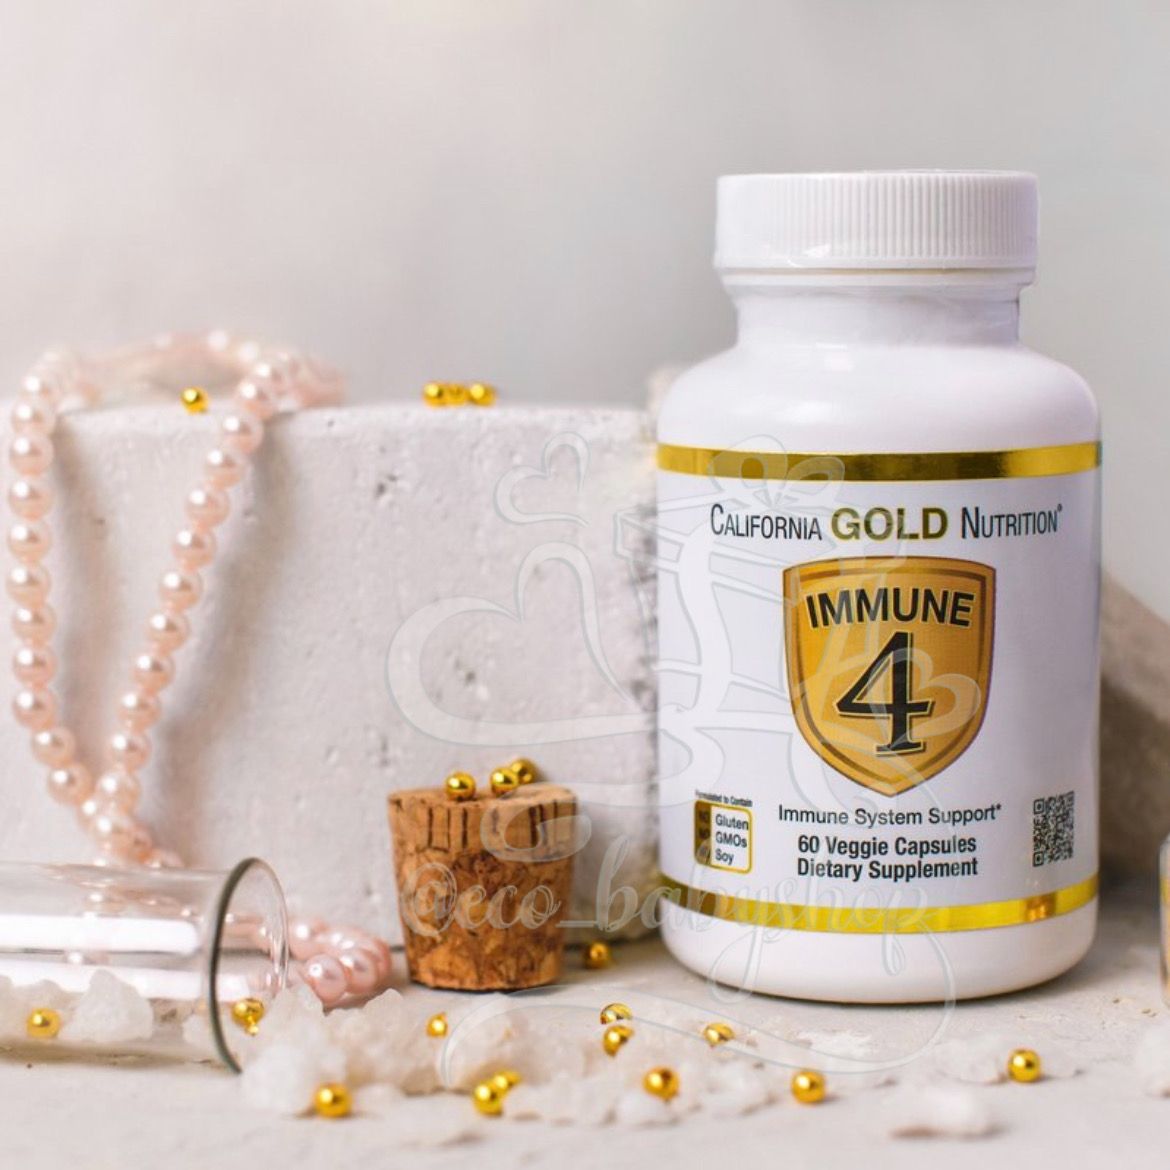 Immune 4 California Gold Nutrition